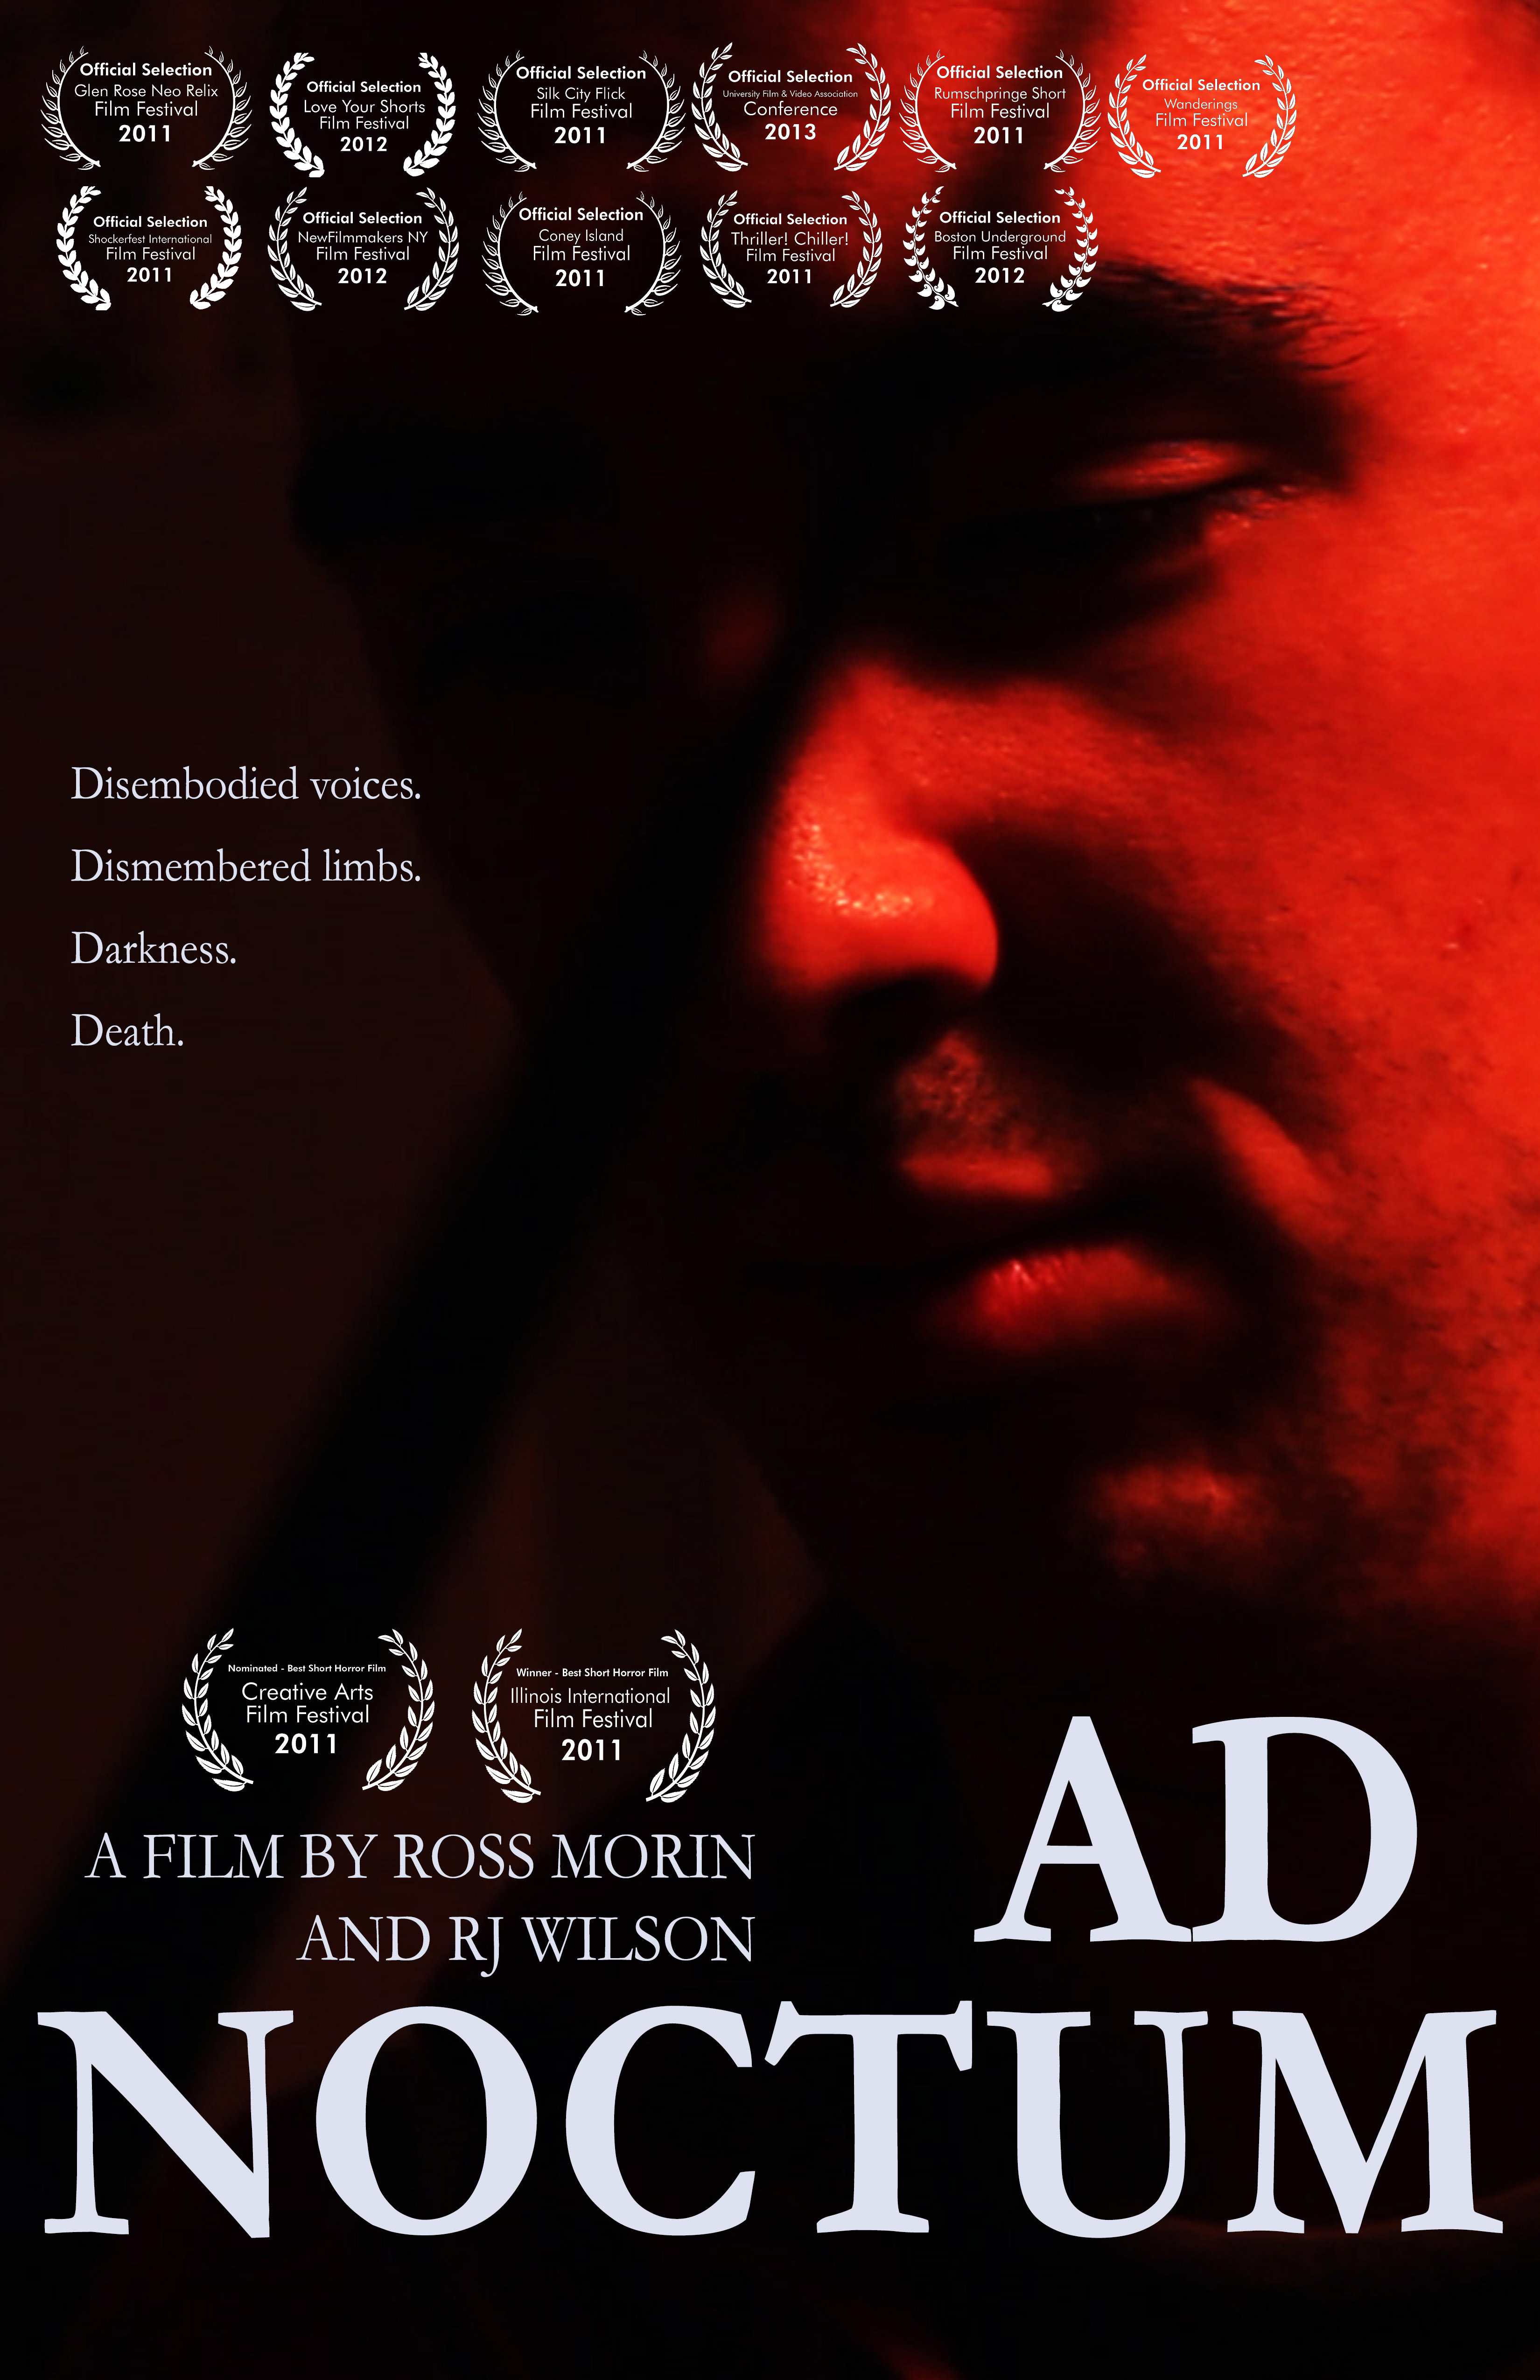 Poster for Ross Morin's film, Ad Noctum